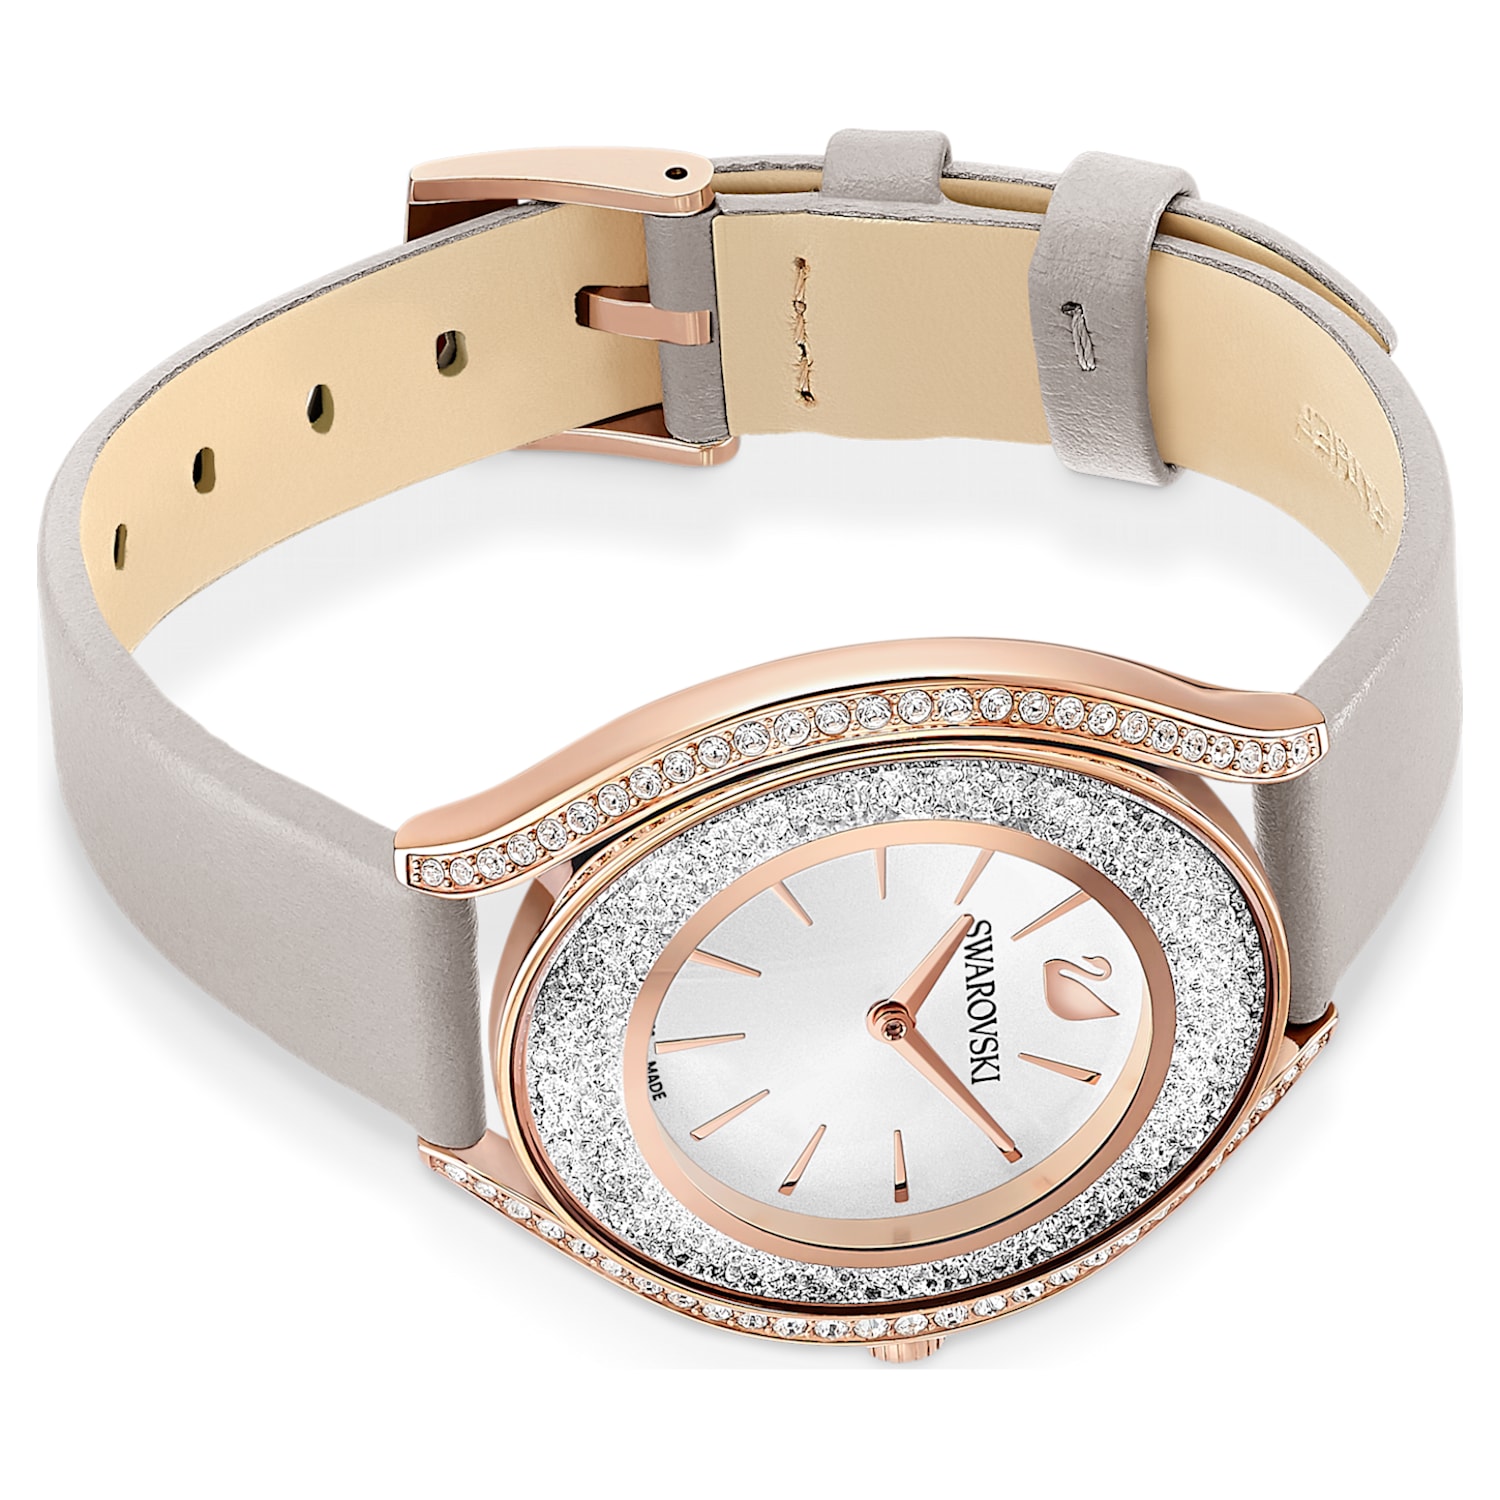 Crystalline Aura watch, Leather strap, Gray, Rose gold-tone finish